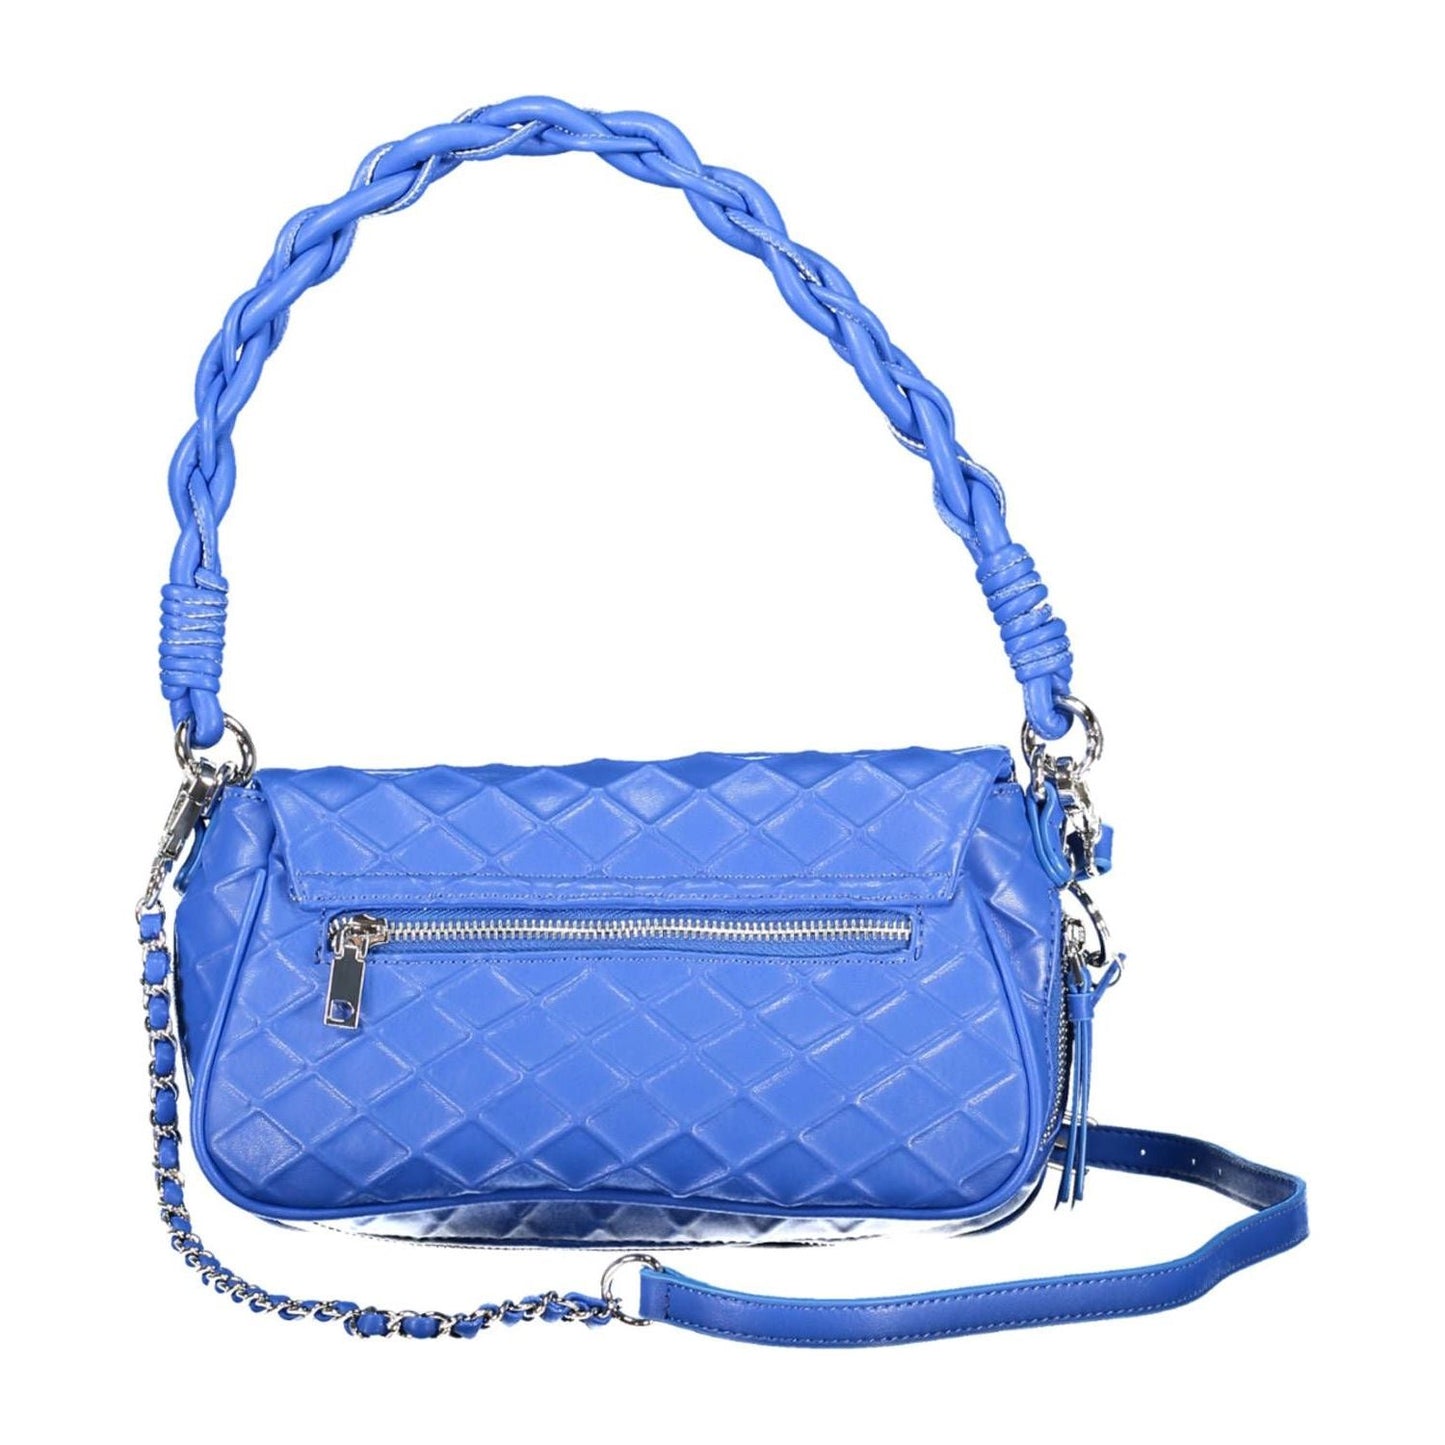 Desigual Chic Expandable Blue Handbag with Contrasting Details chic-expandable-blue-handbag-with-contrasting-details